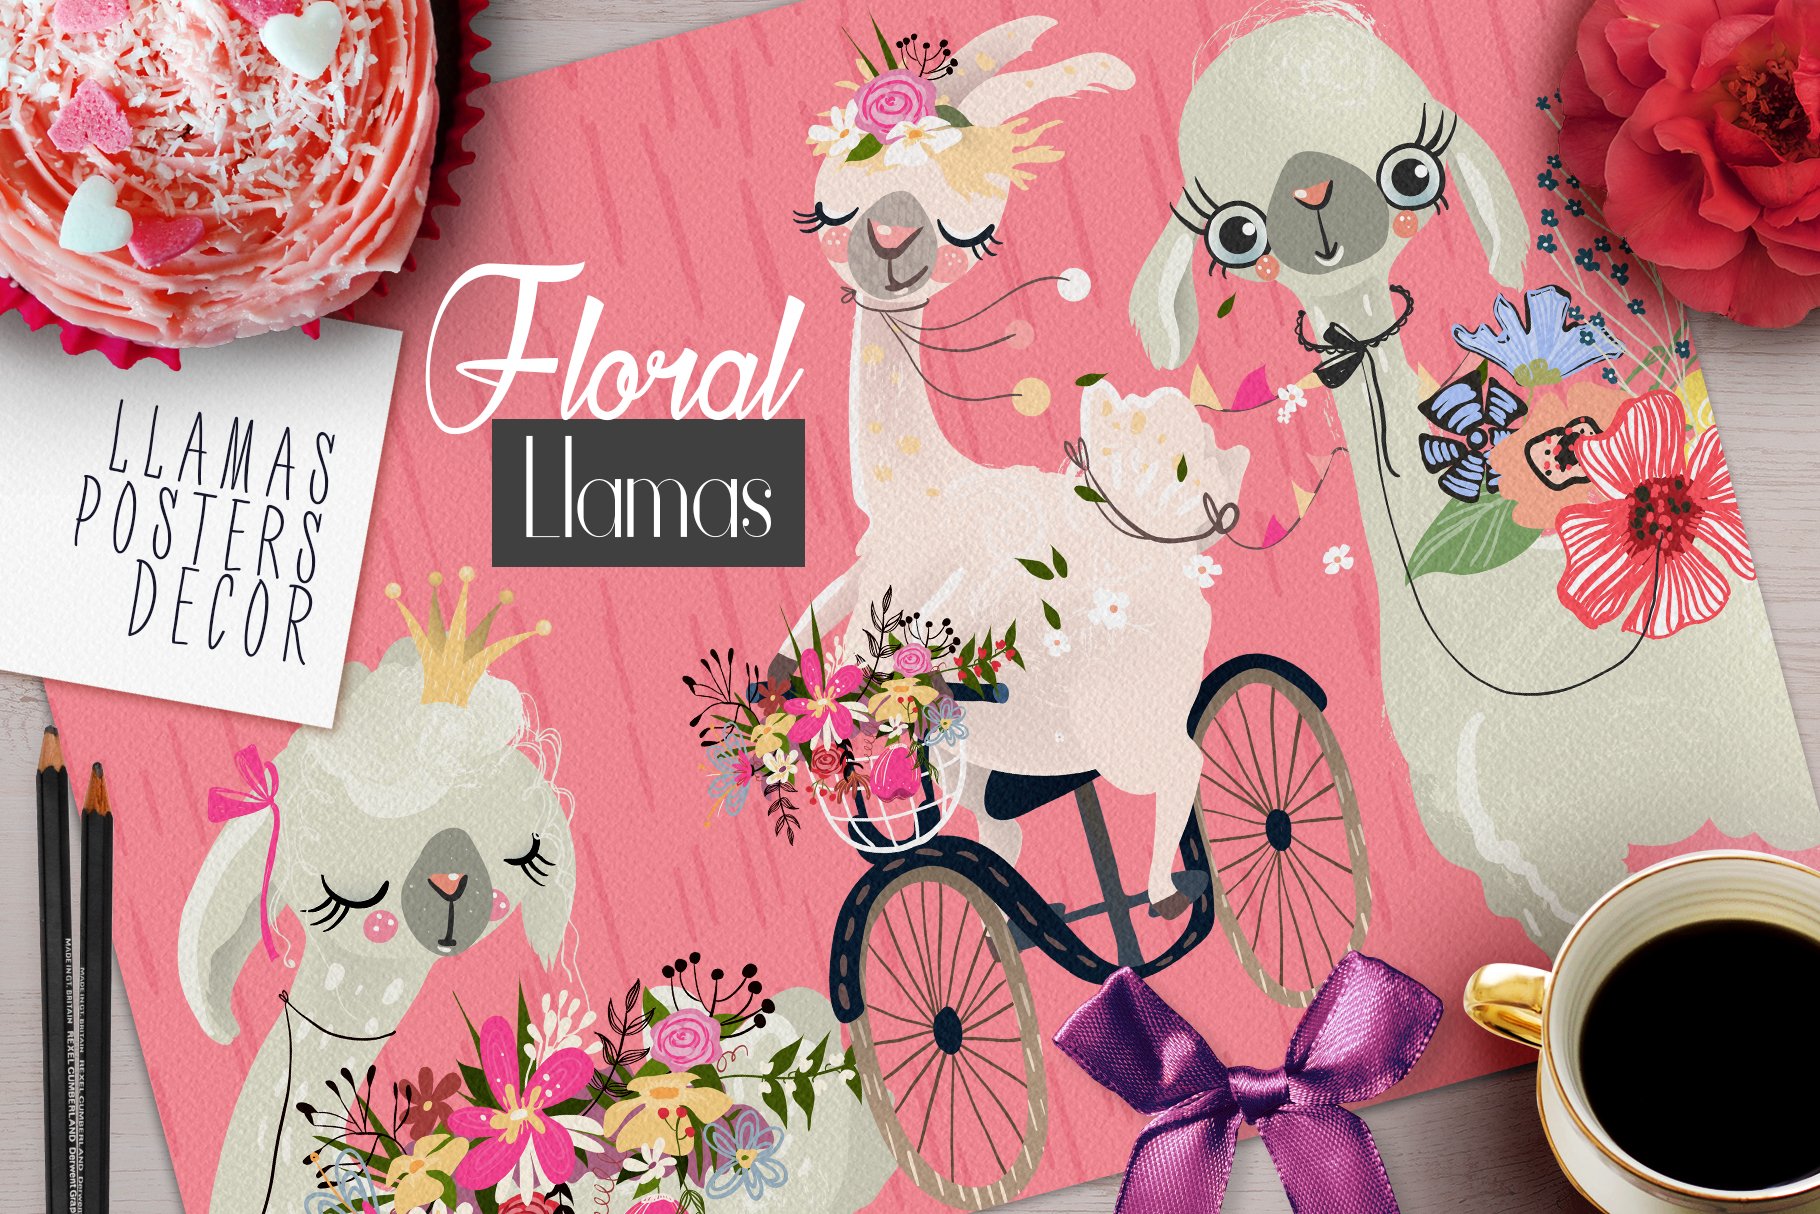 Floral Llamas cover image.